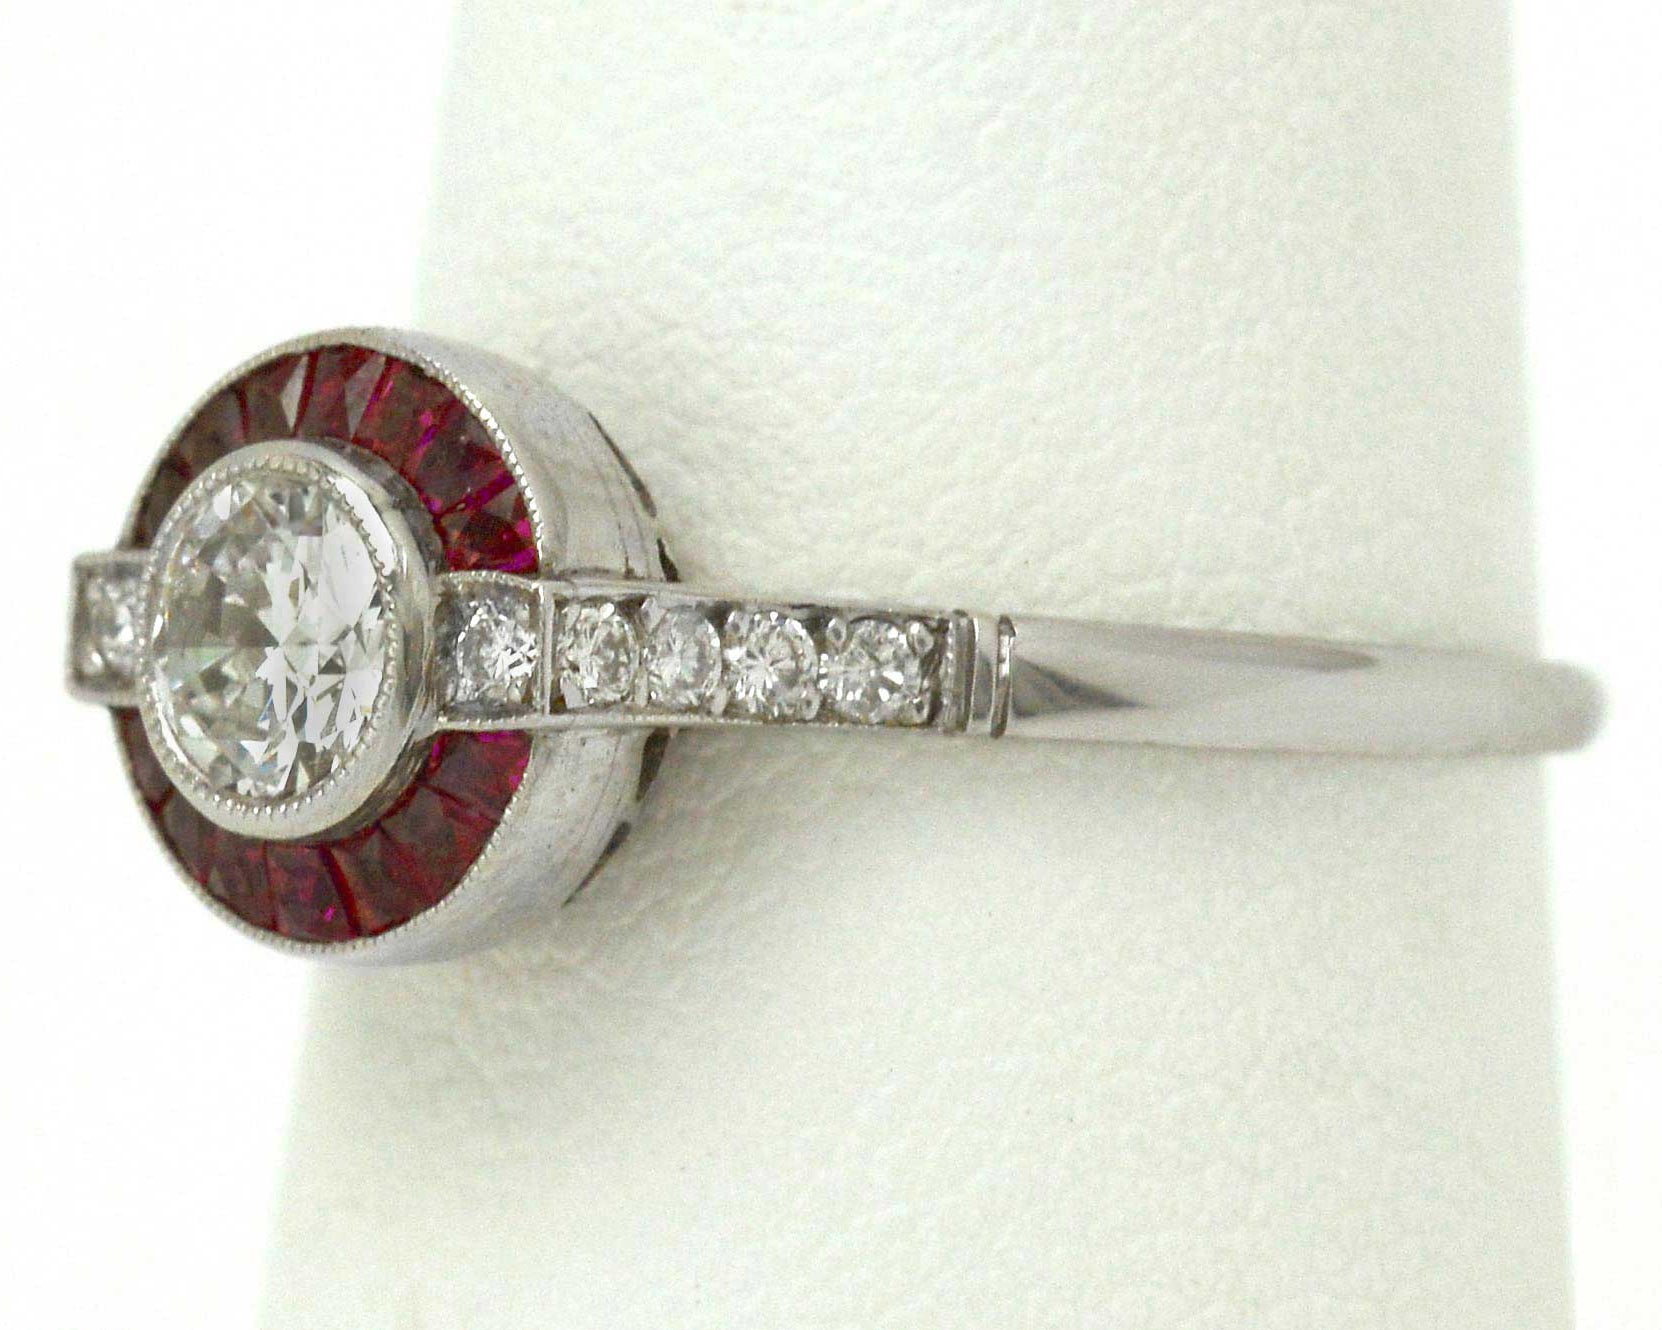 An old European brilliant diamond set in a ruby target Art Deco wedding ring design.